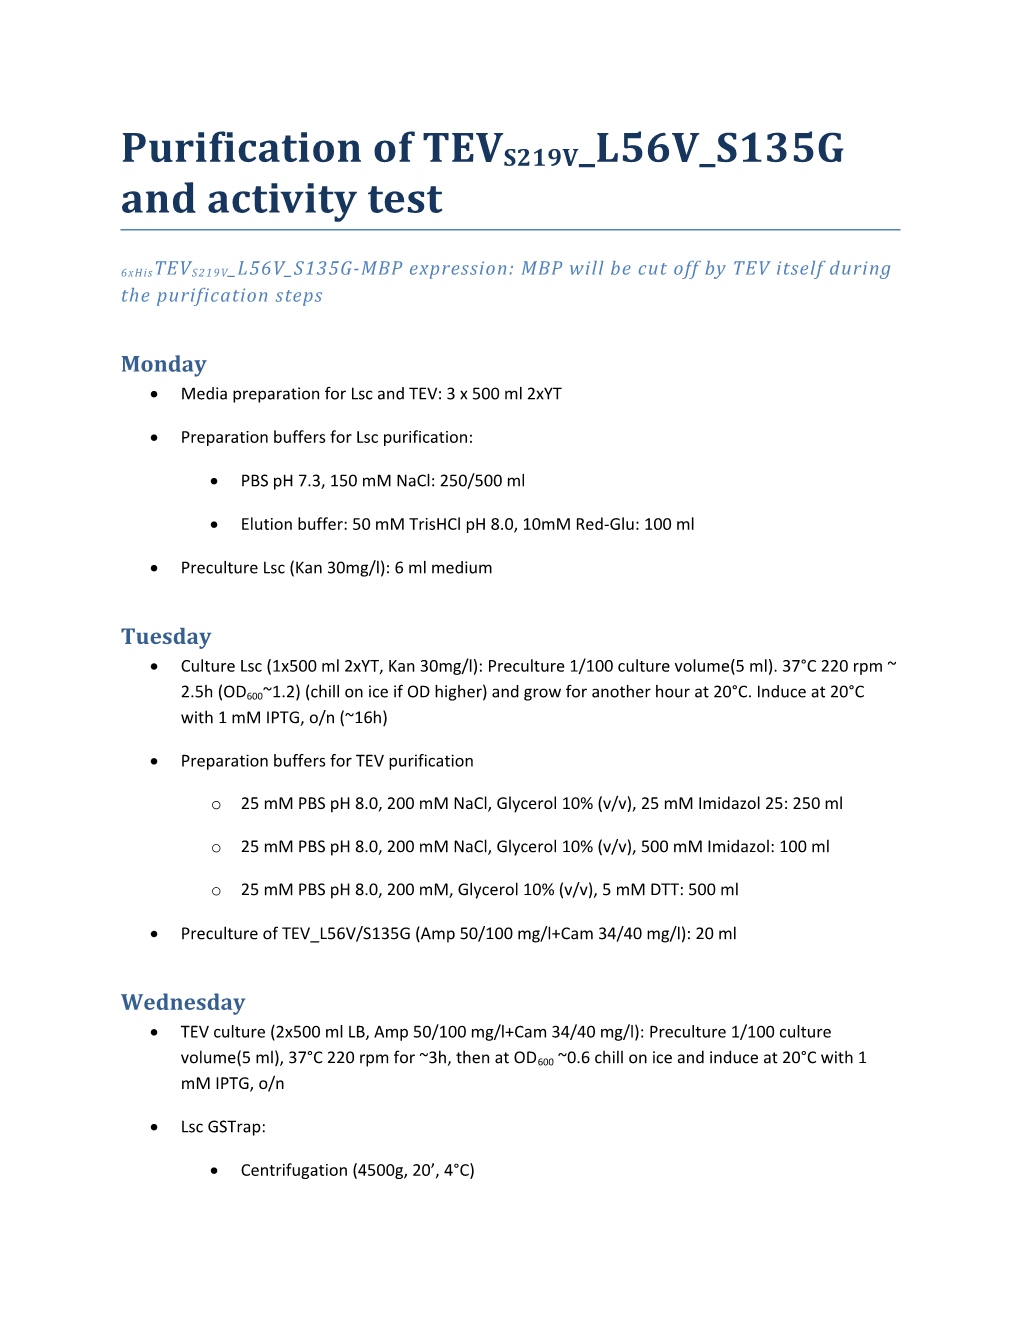 Purification of TEVS219V L56V S135G and Activity Test